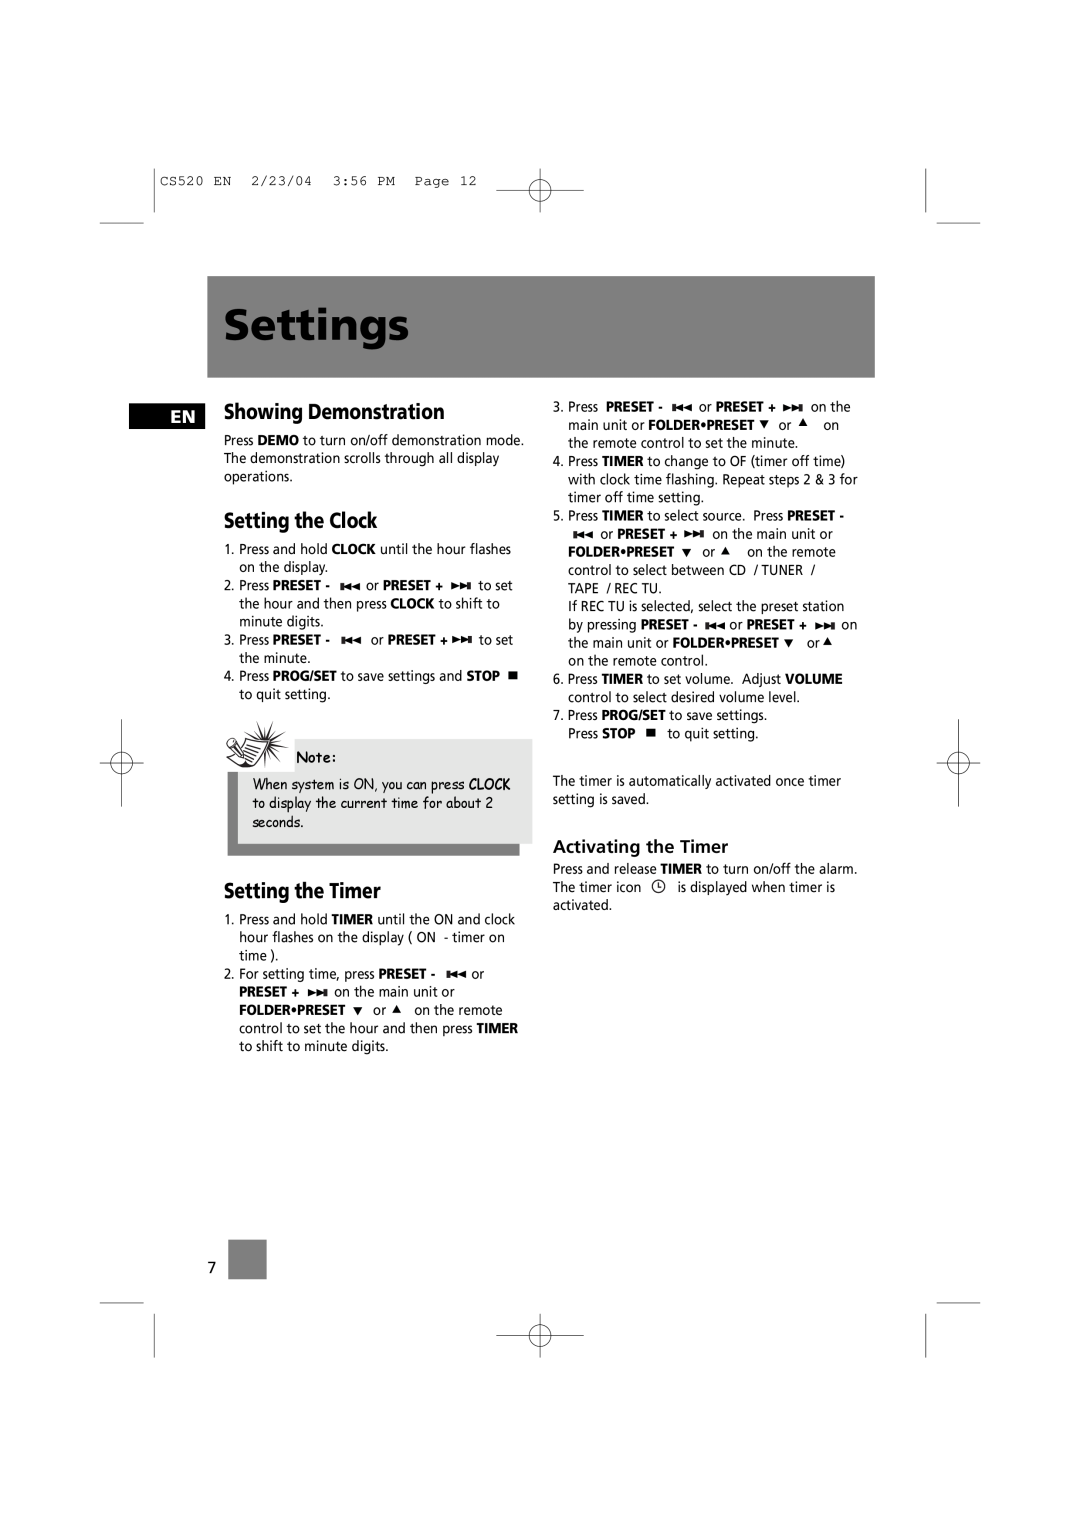 Technicolor - Thomson CS520 manual Settings, EN Showing Demonstration, Setting the Clock, Setting the Timer 